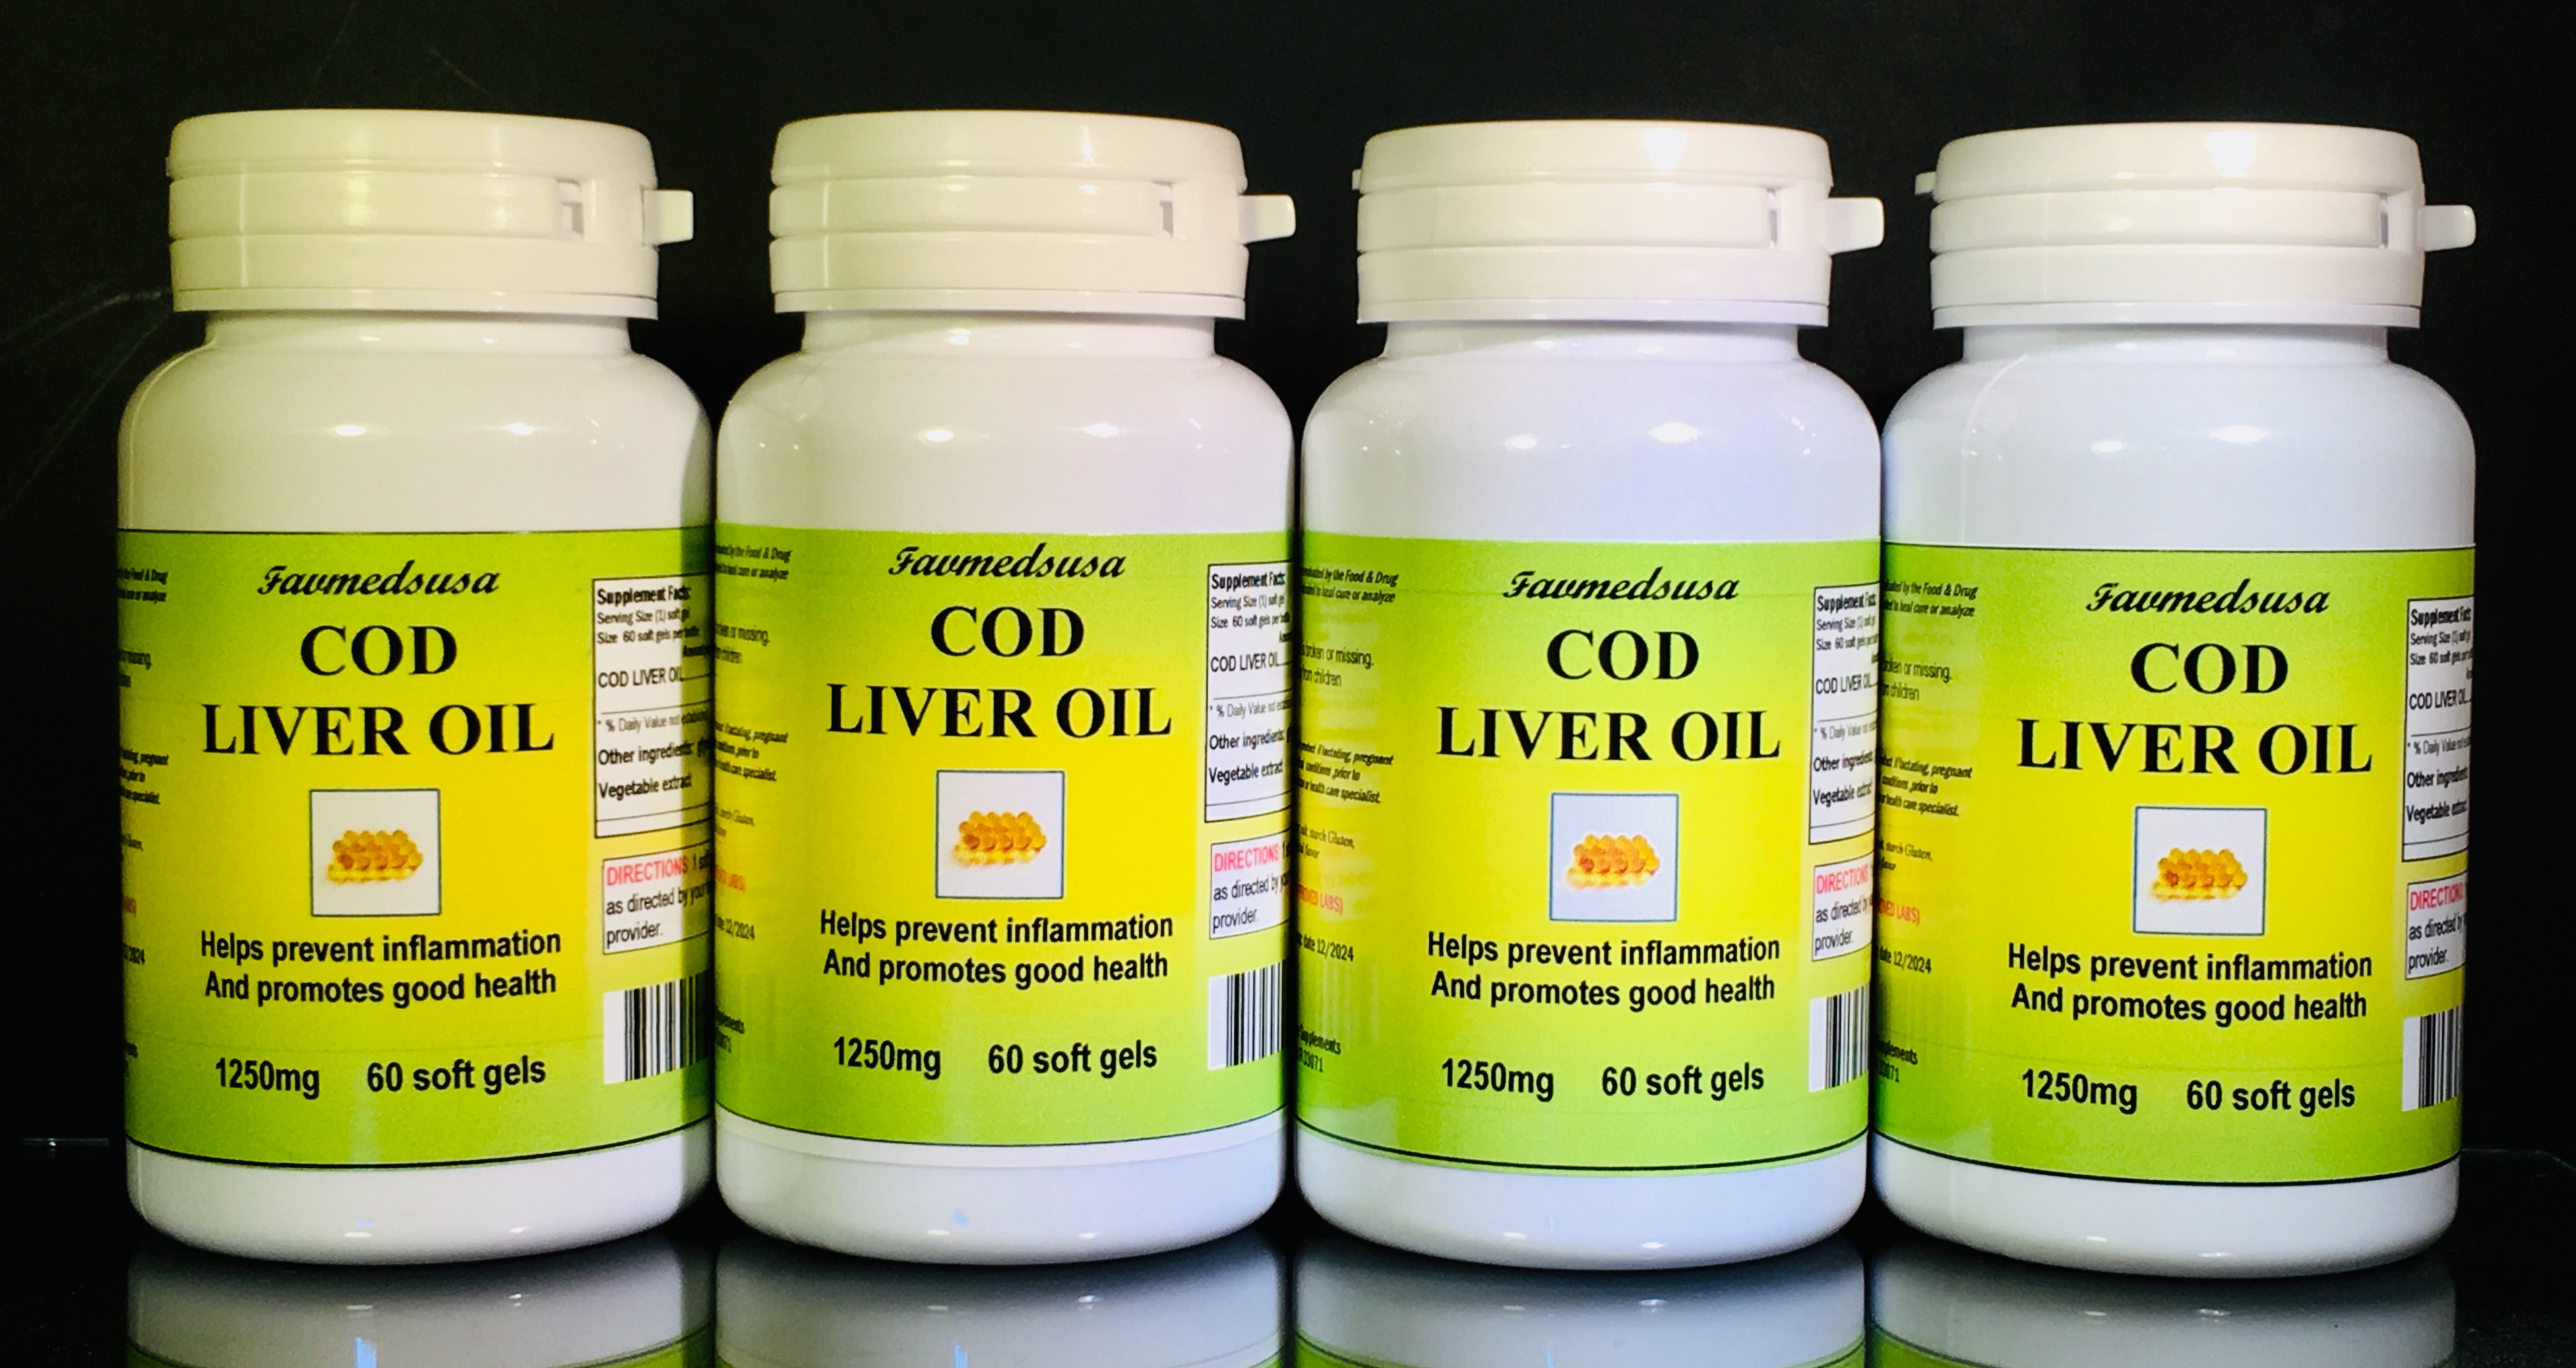 Cod Liver Oil 1250mg -  240 (4x60) soft gels